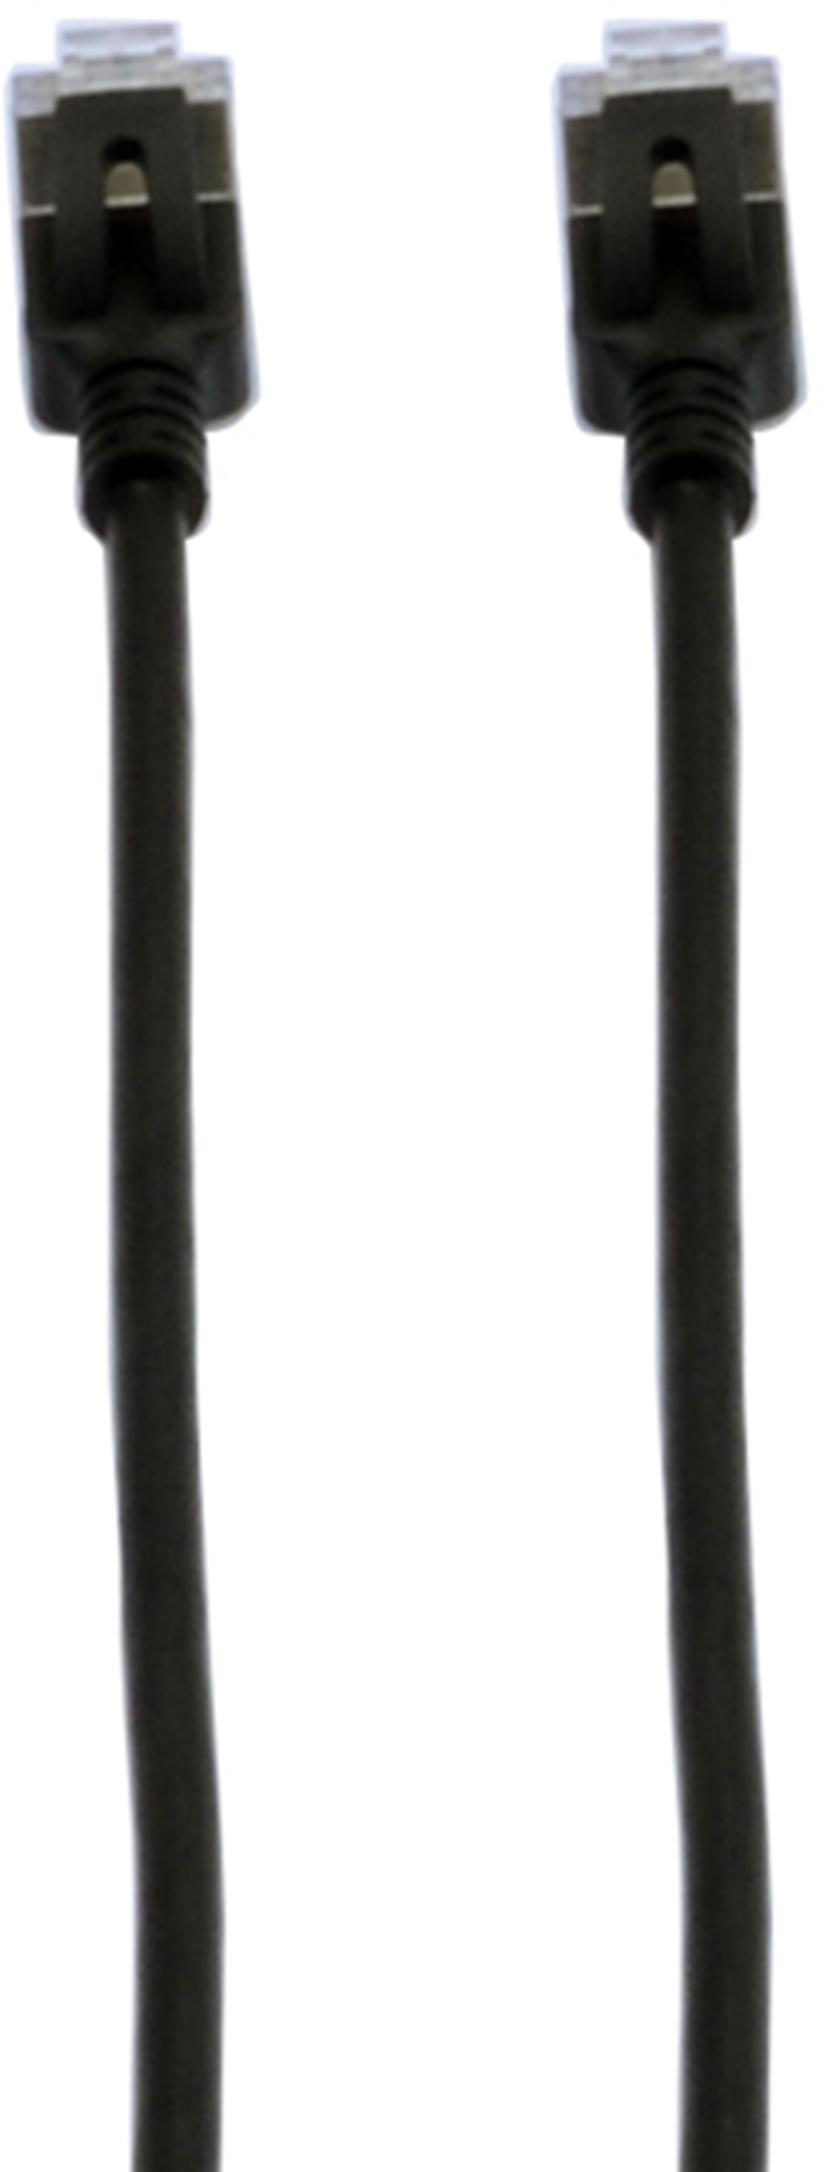 Prokord TP-Cable U/FTP CAT.6A Slim Lszh RJ45 0.3m Black RJ-45 RJ-45 CAT 6a 0.3m Musta